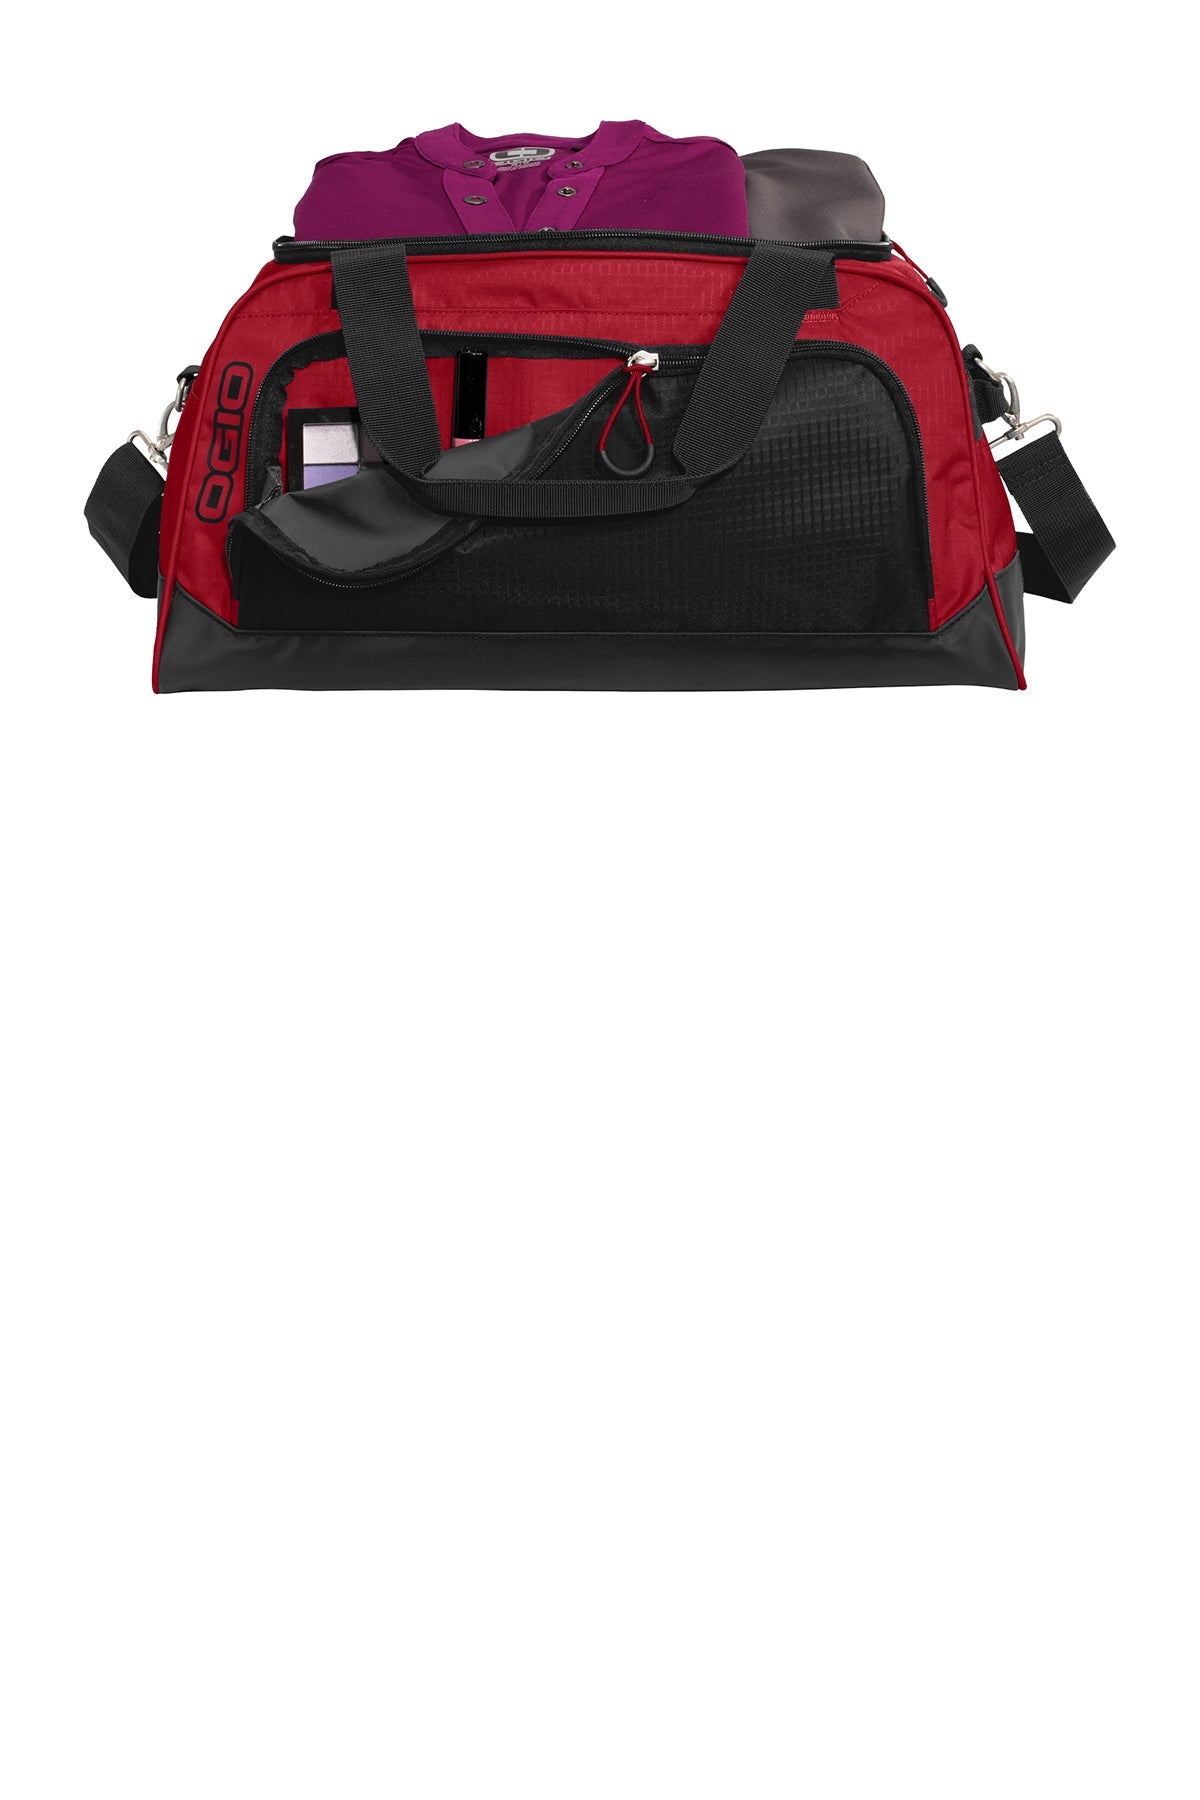 OGIO Breakaway Customized Duffel Bags, Ripped Red